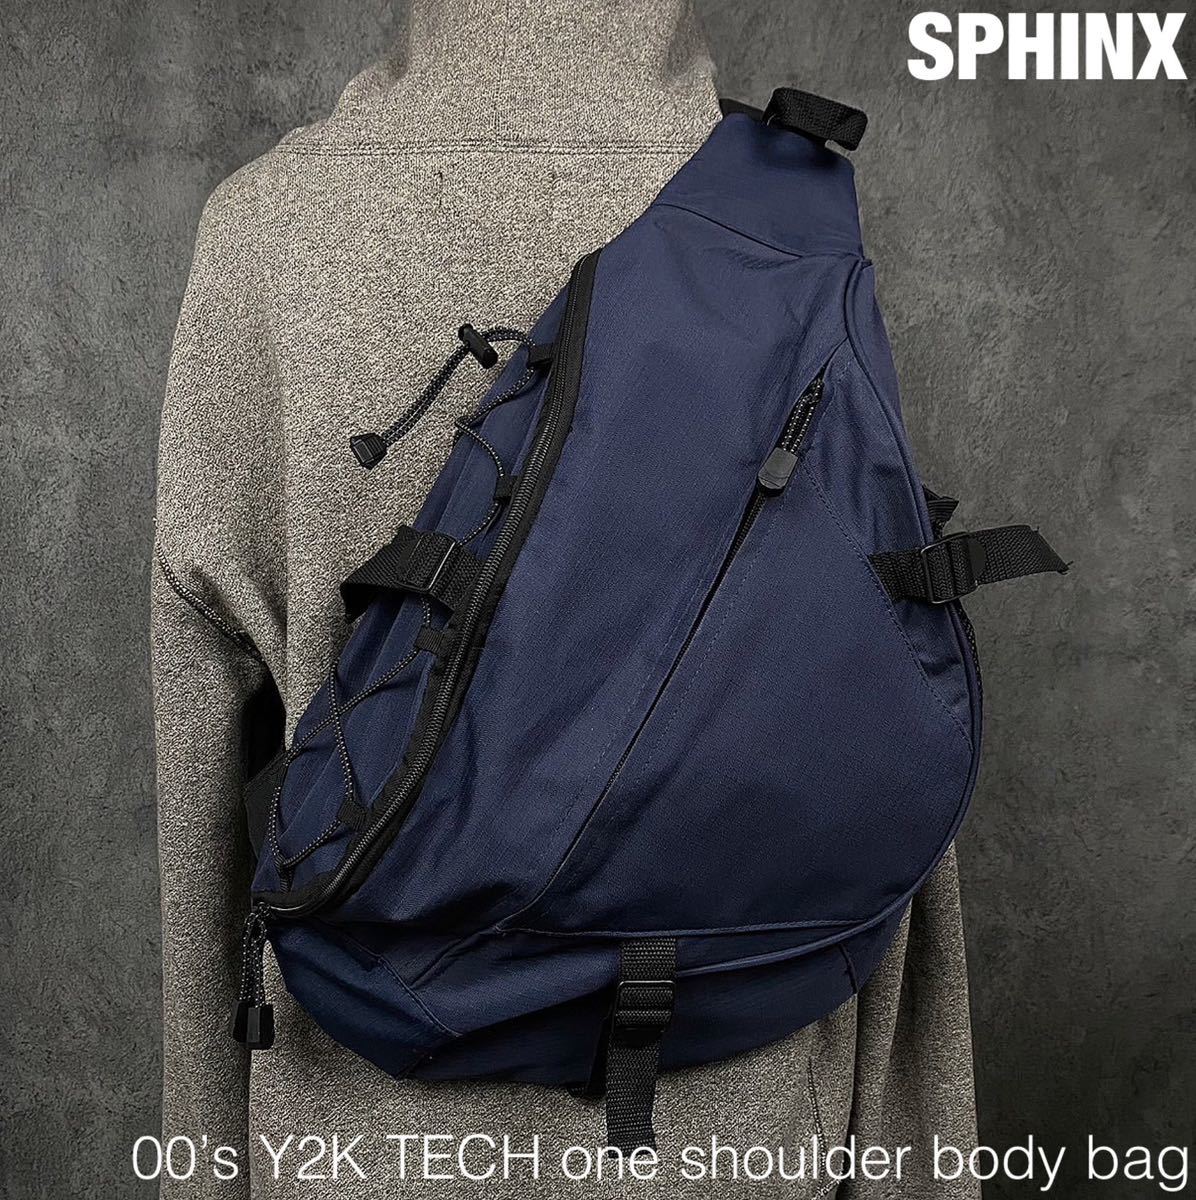 Sphinx スリングバッグ y2k テック系 00s ワンショルダーバッグ-